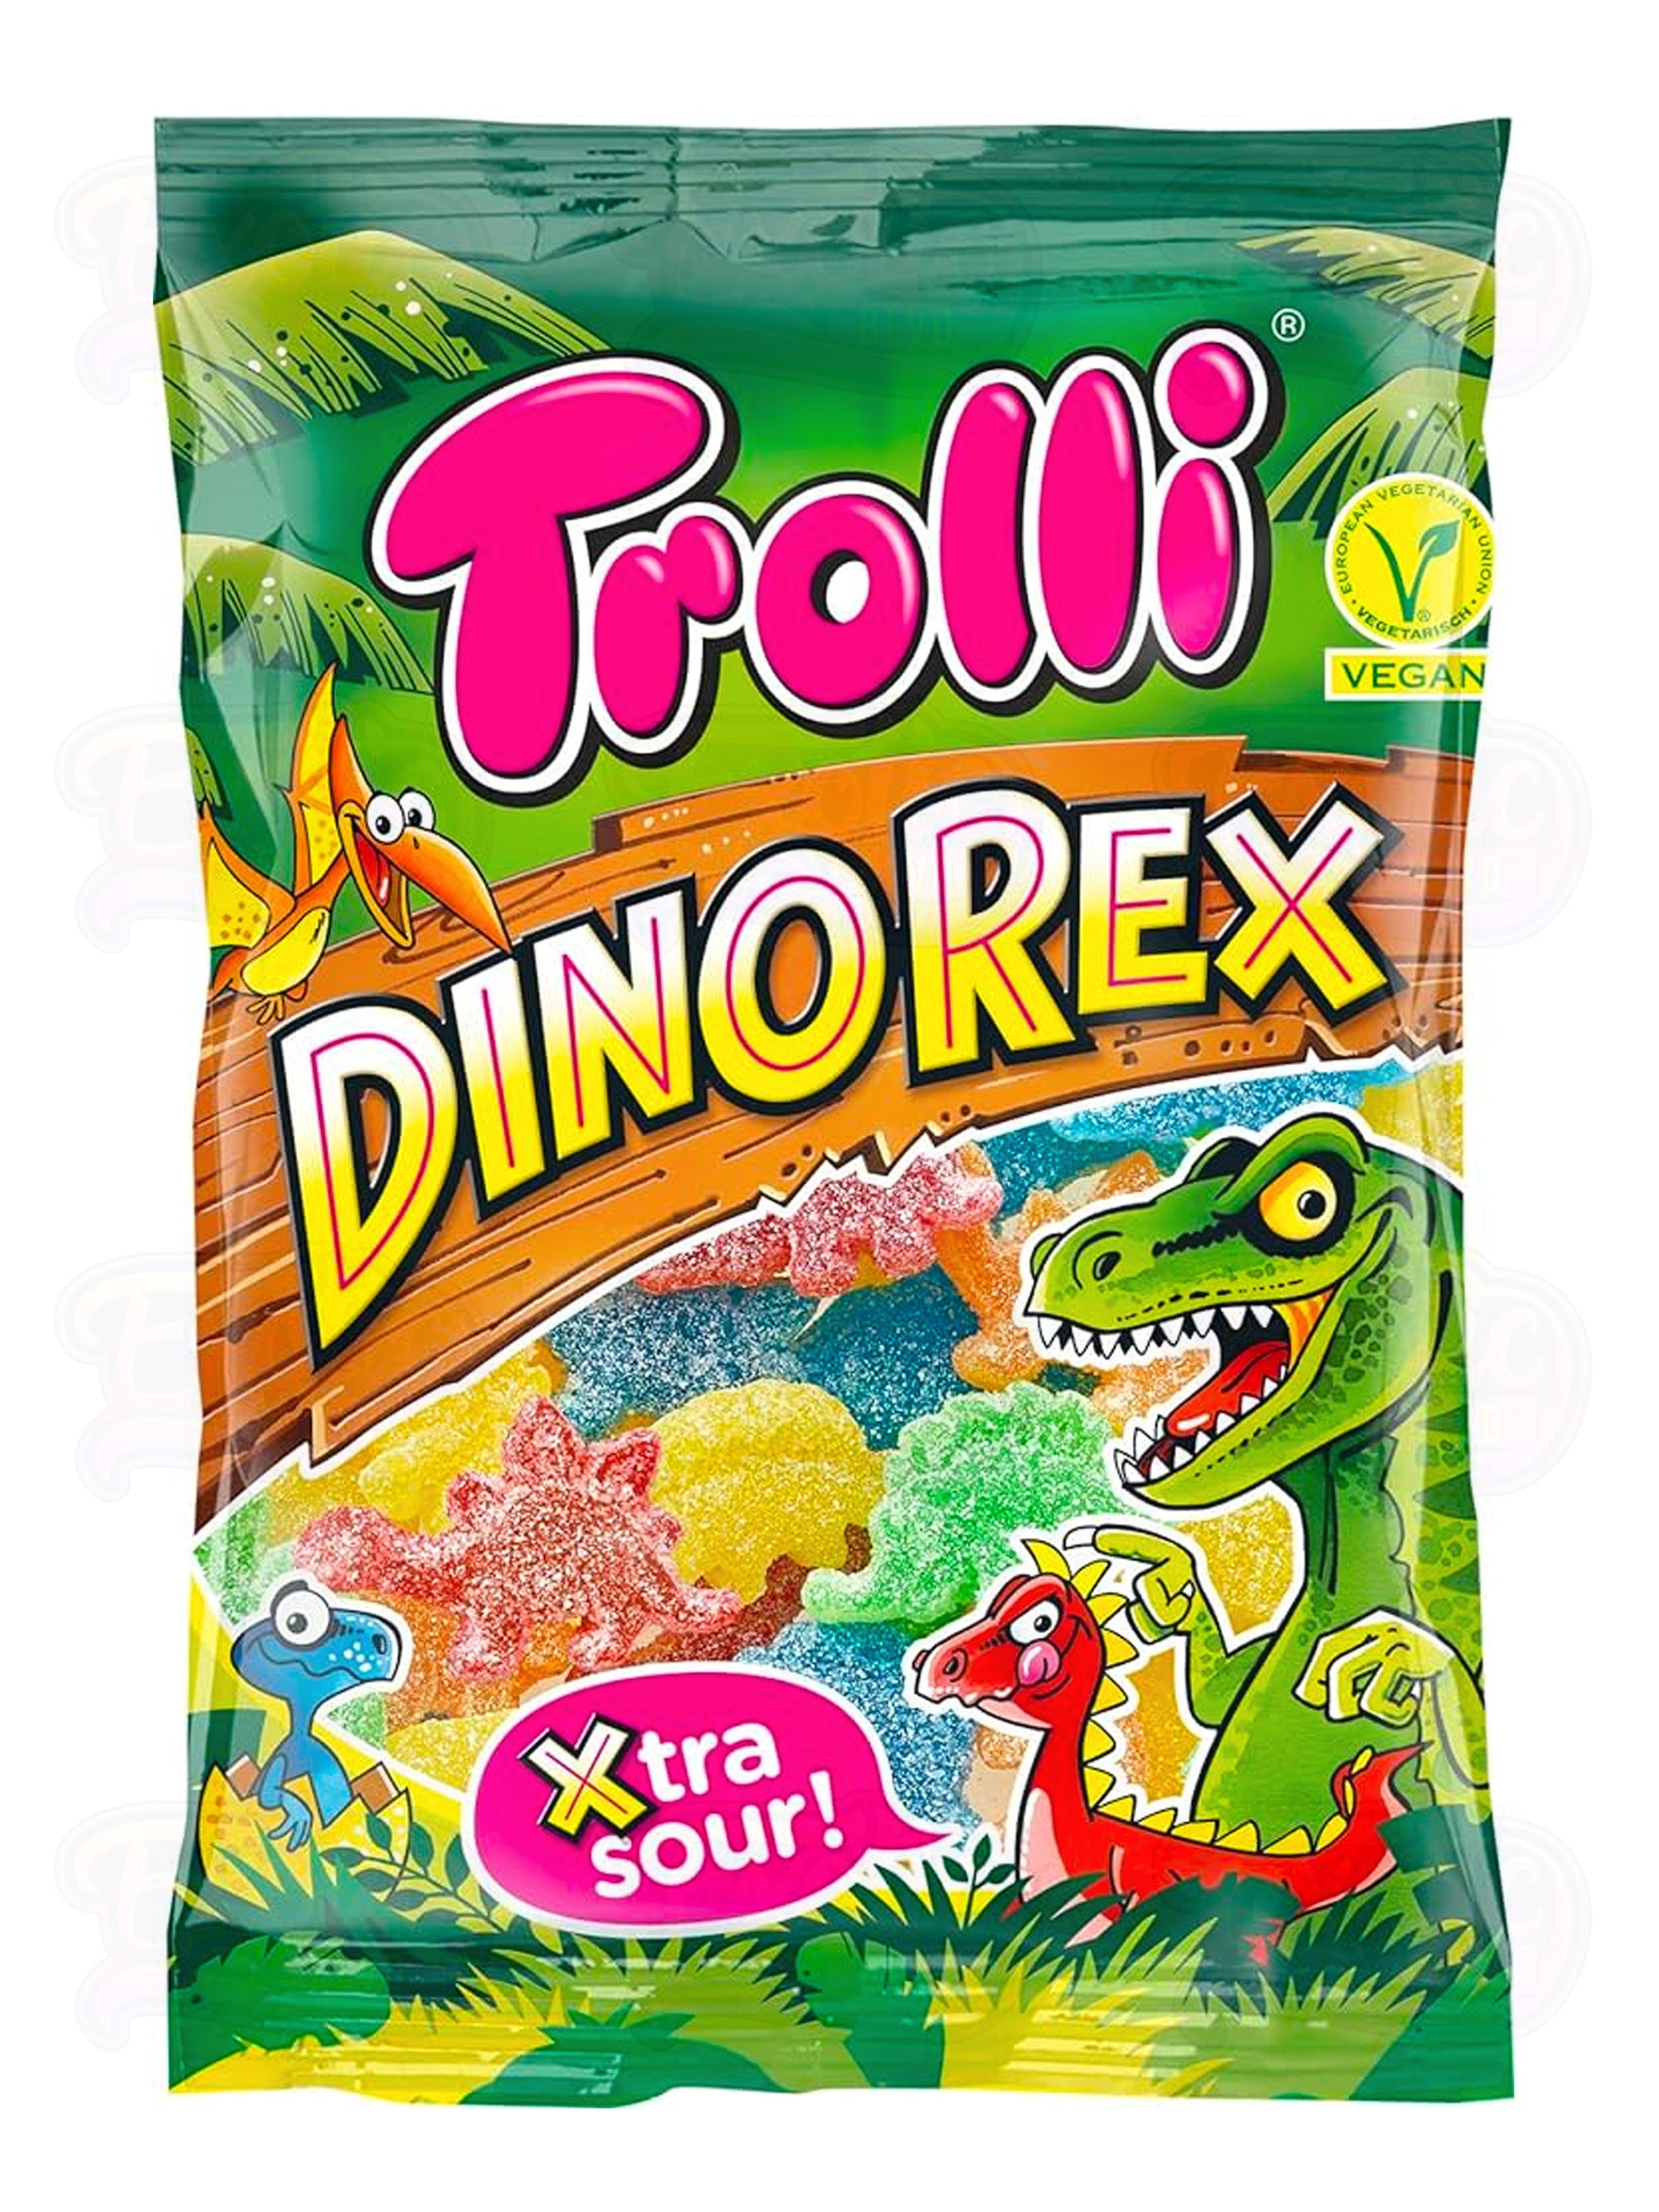 Trolli Dinorex